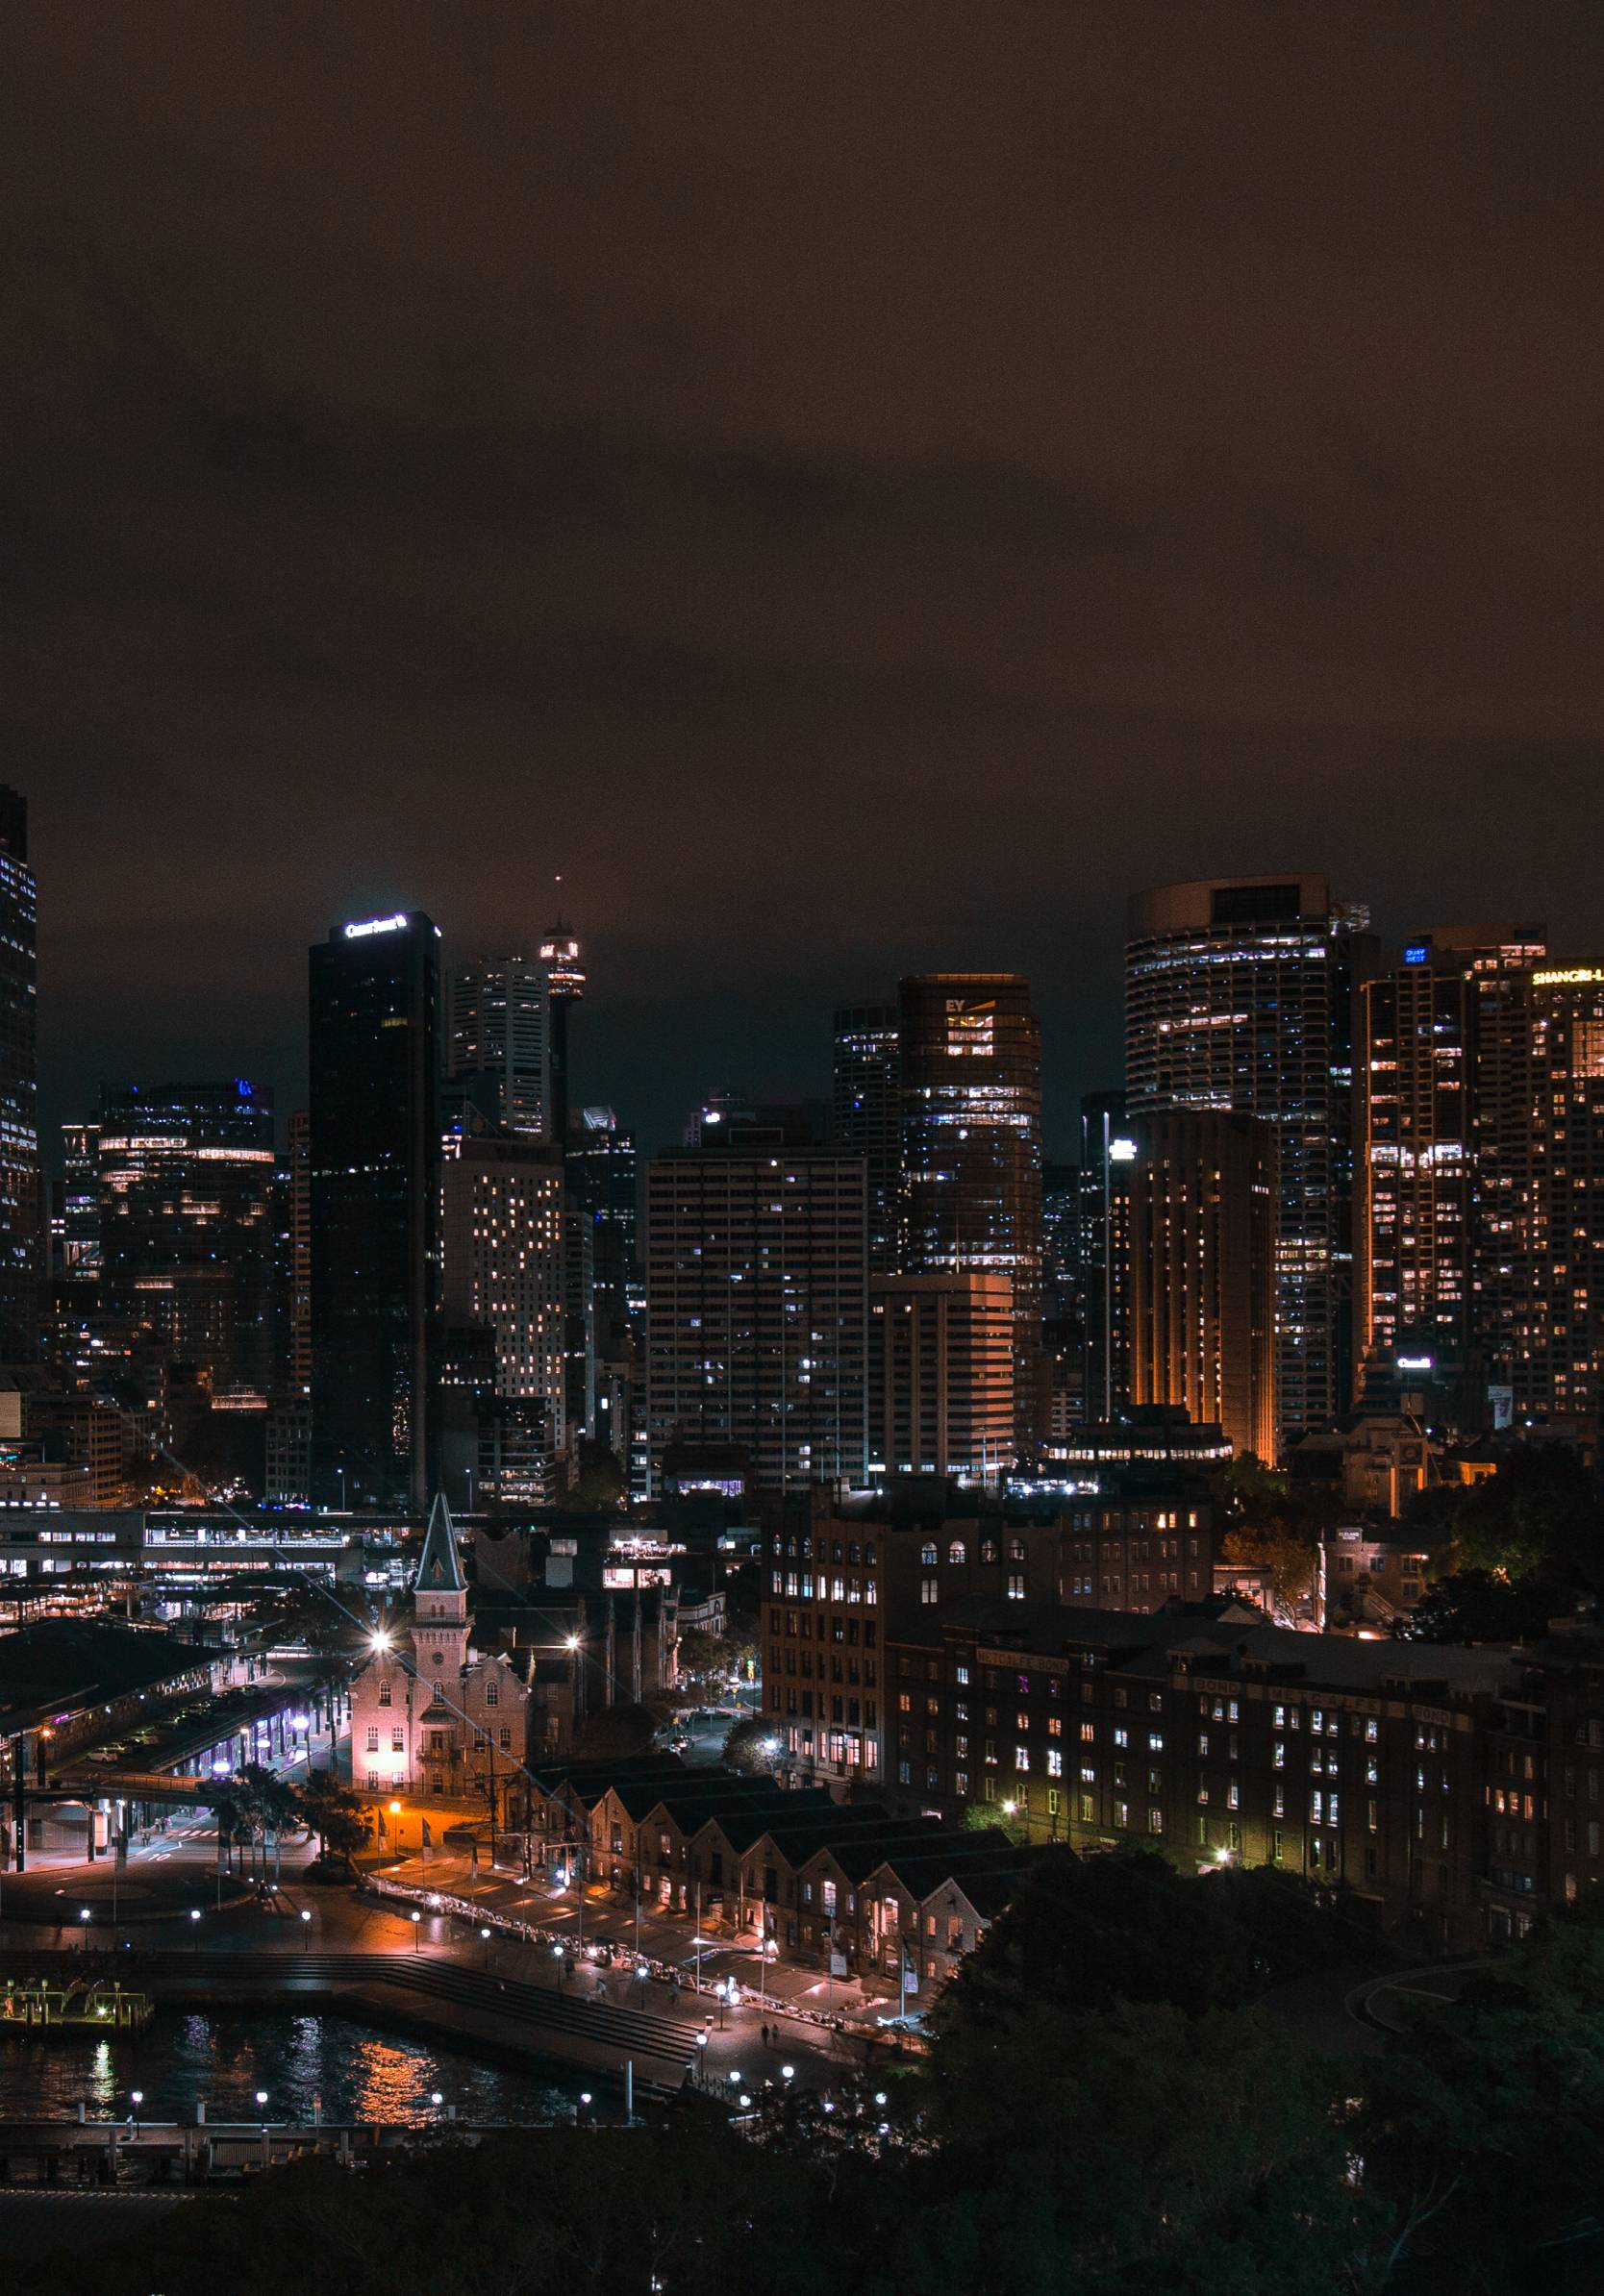 A city skyline at night with lights on - City